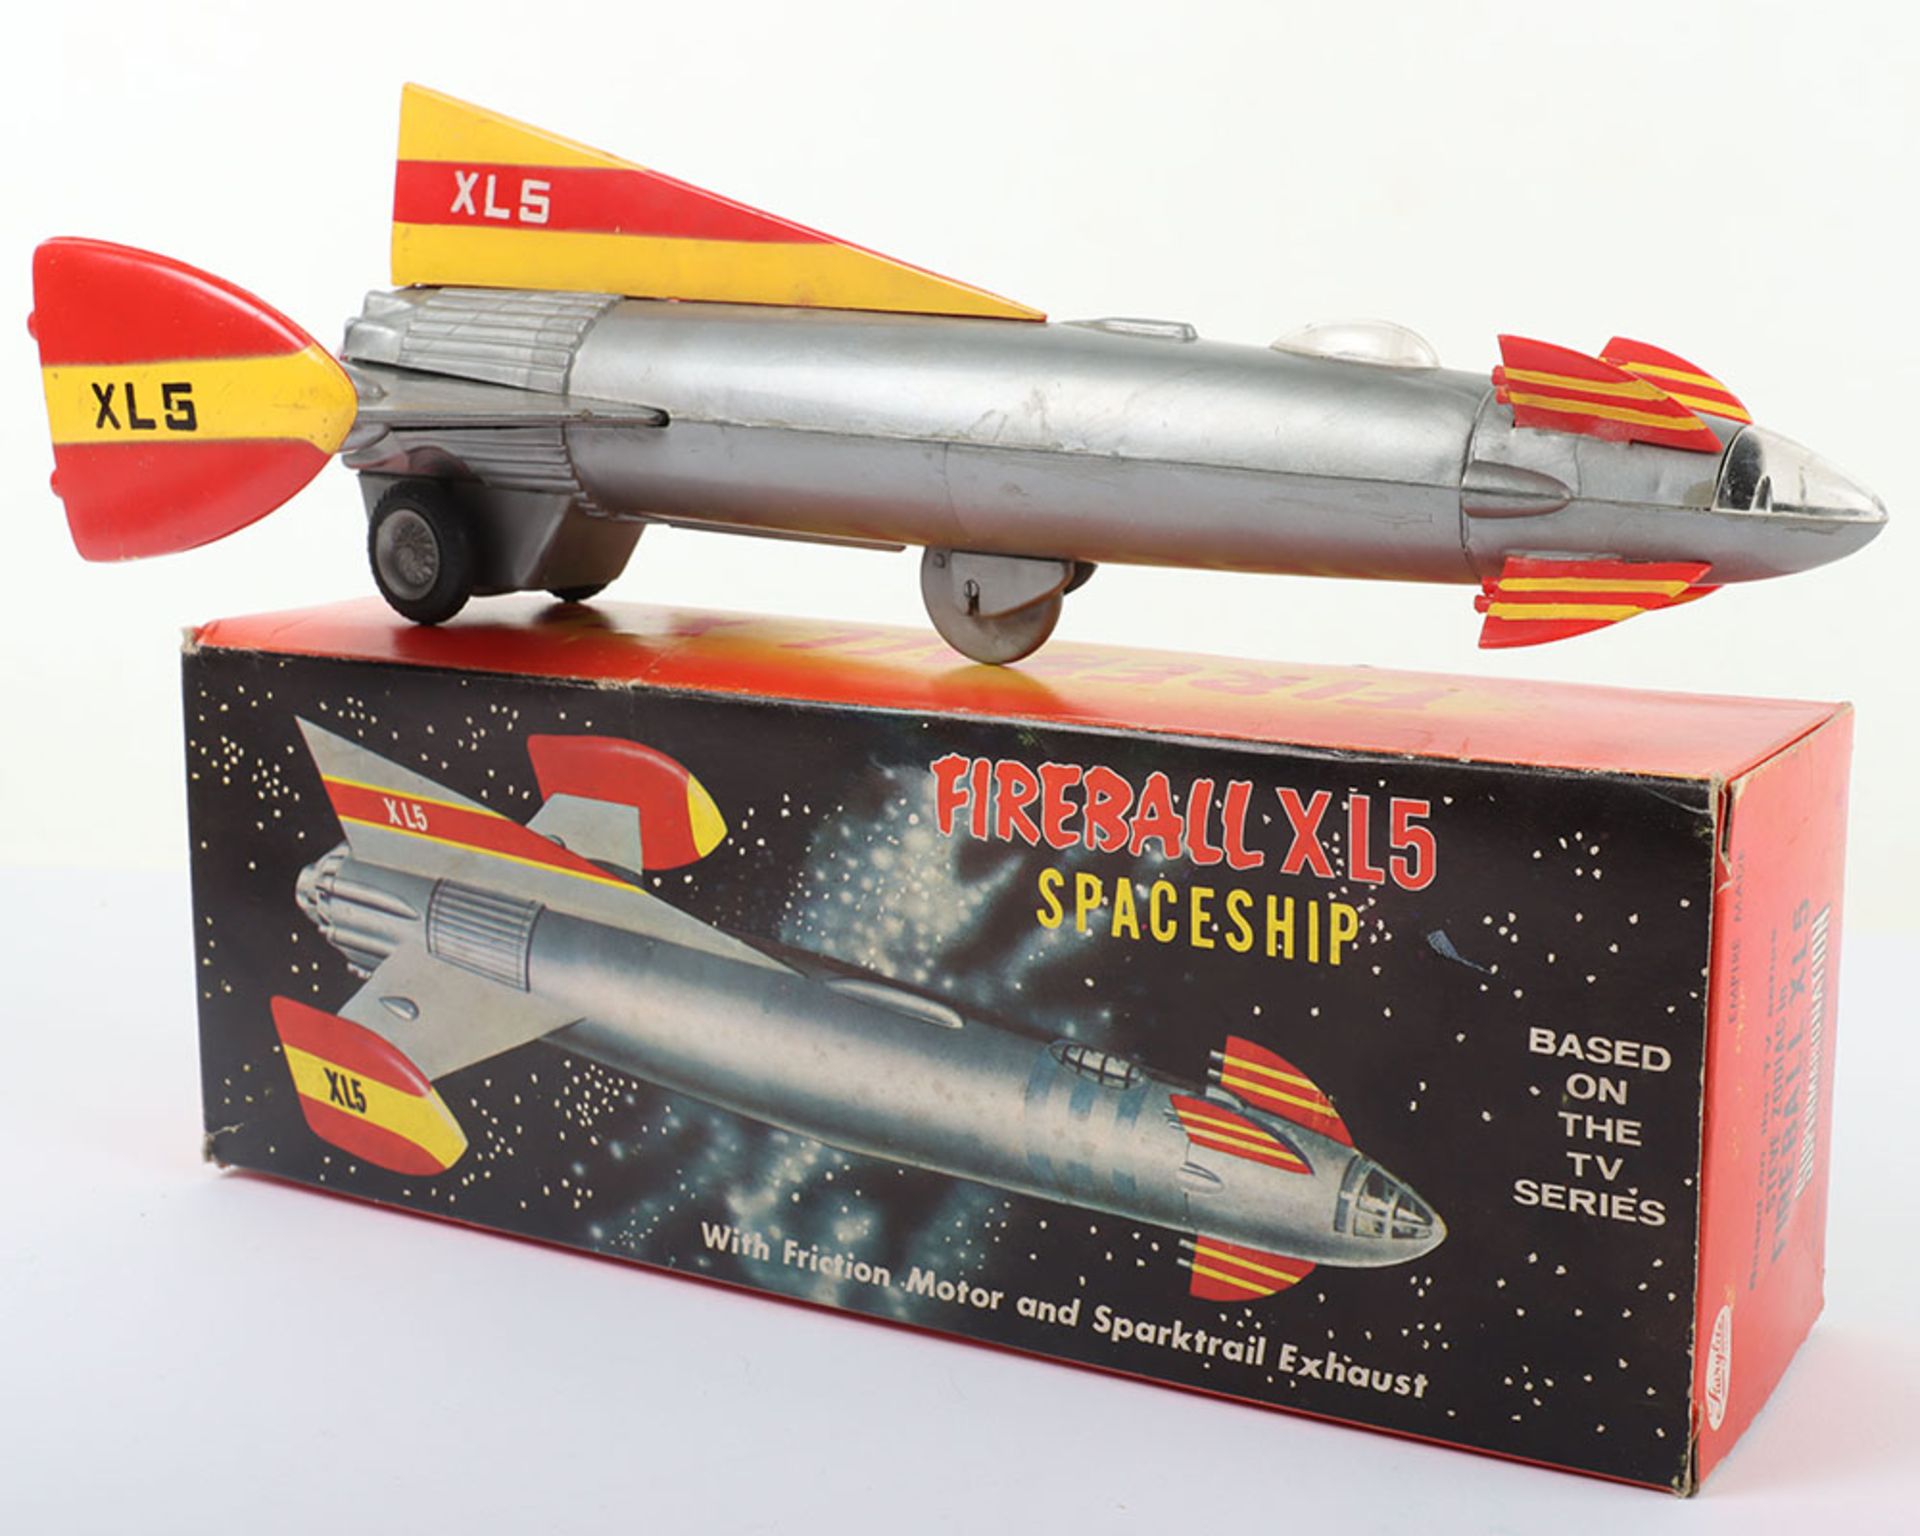 Fairylite Fireball XL5 Spaceship Based on The Tv Series